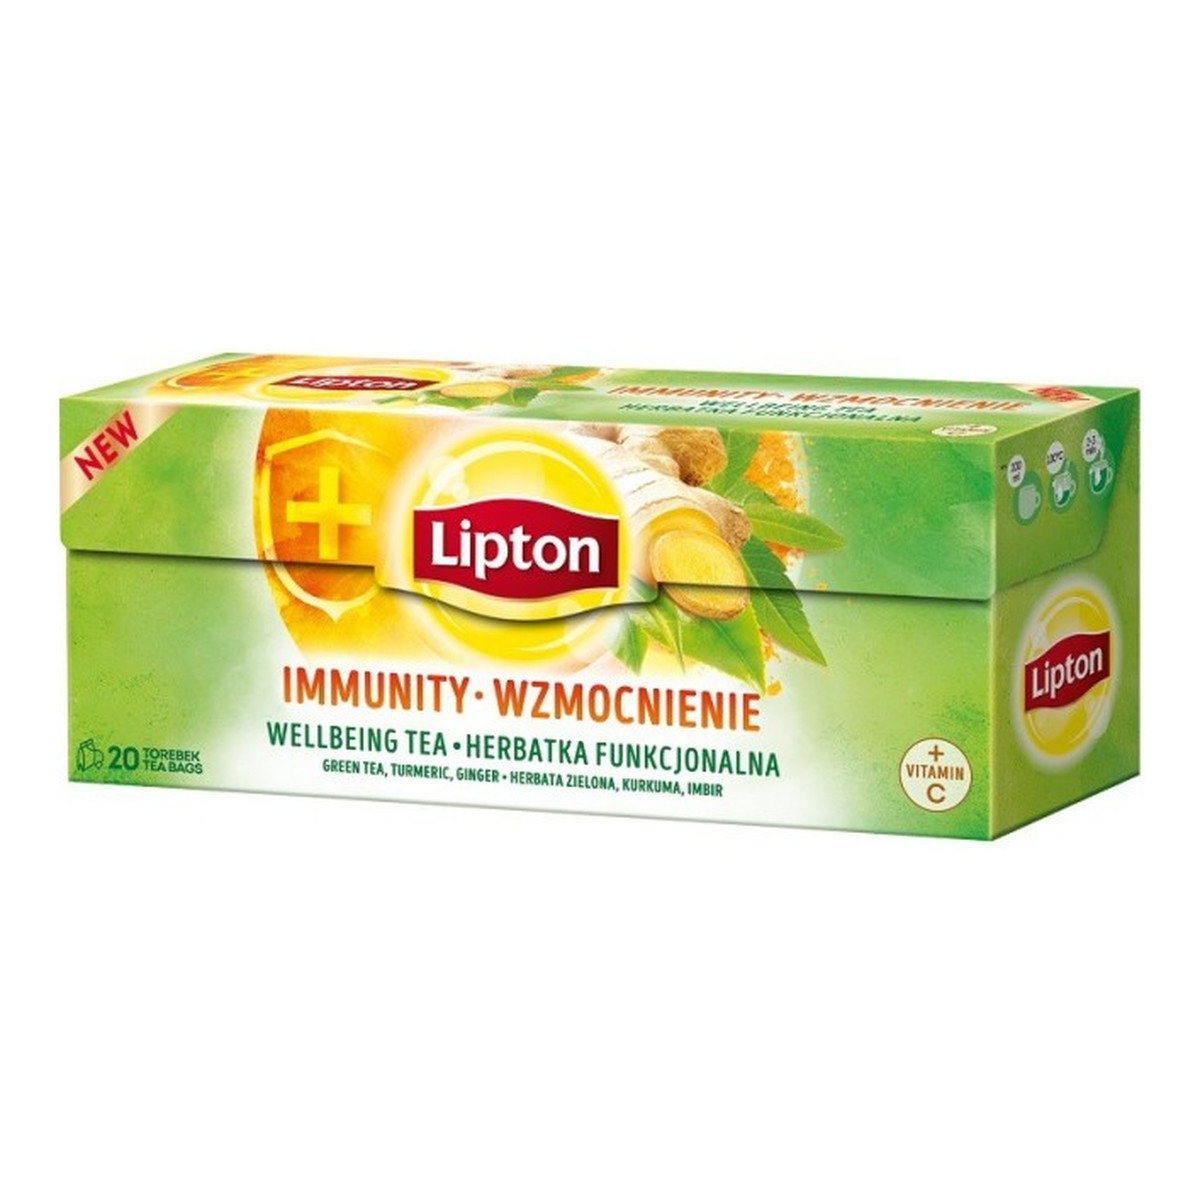 Lipton Wzmocnienie Herbata funkcjonalna 20 torebek 32g